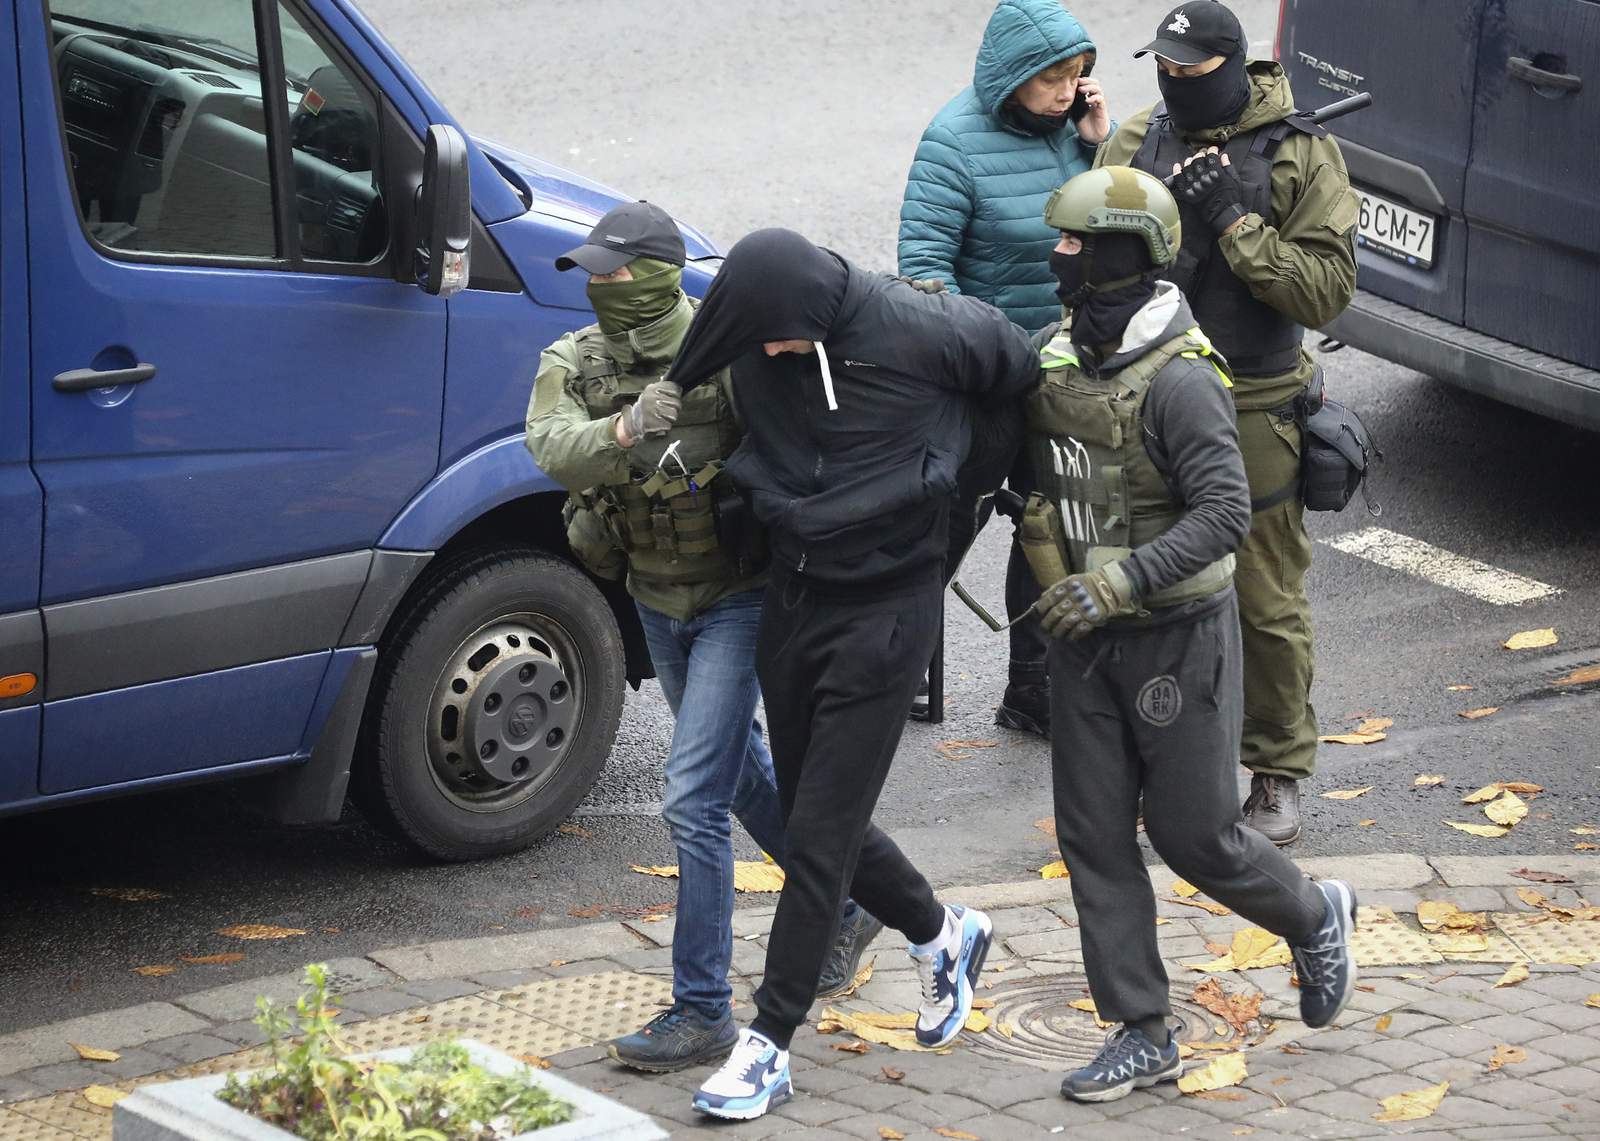 Club-wielding police in Belarus arrest over 500 protesters